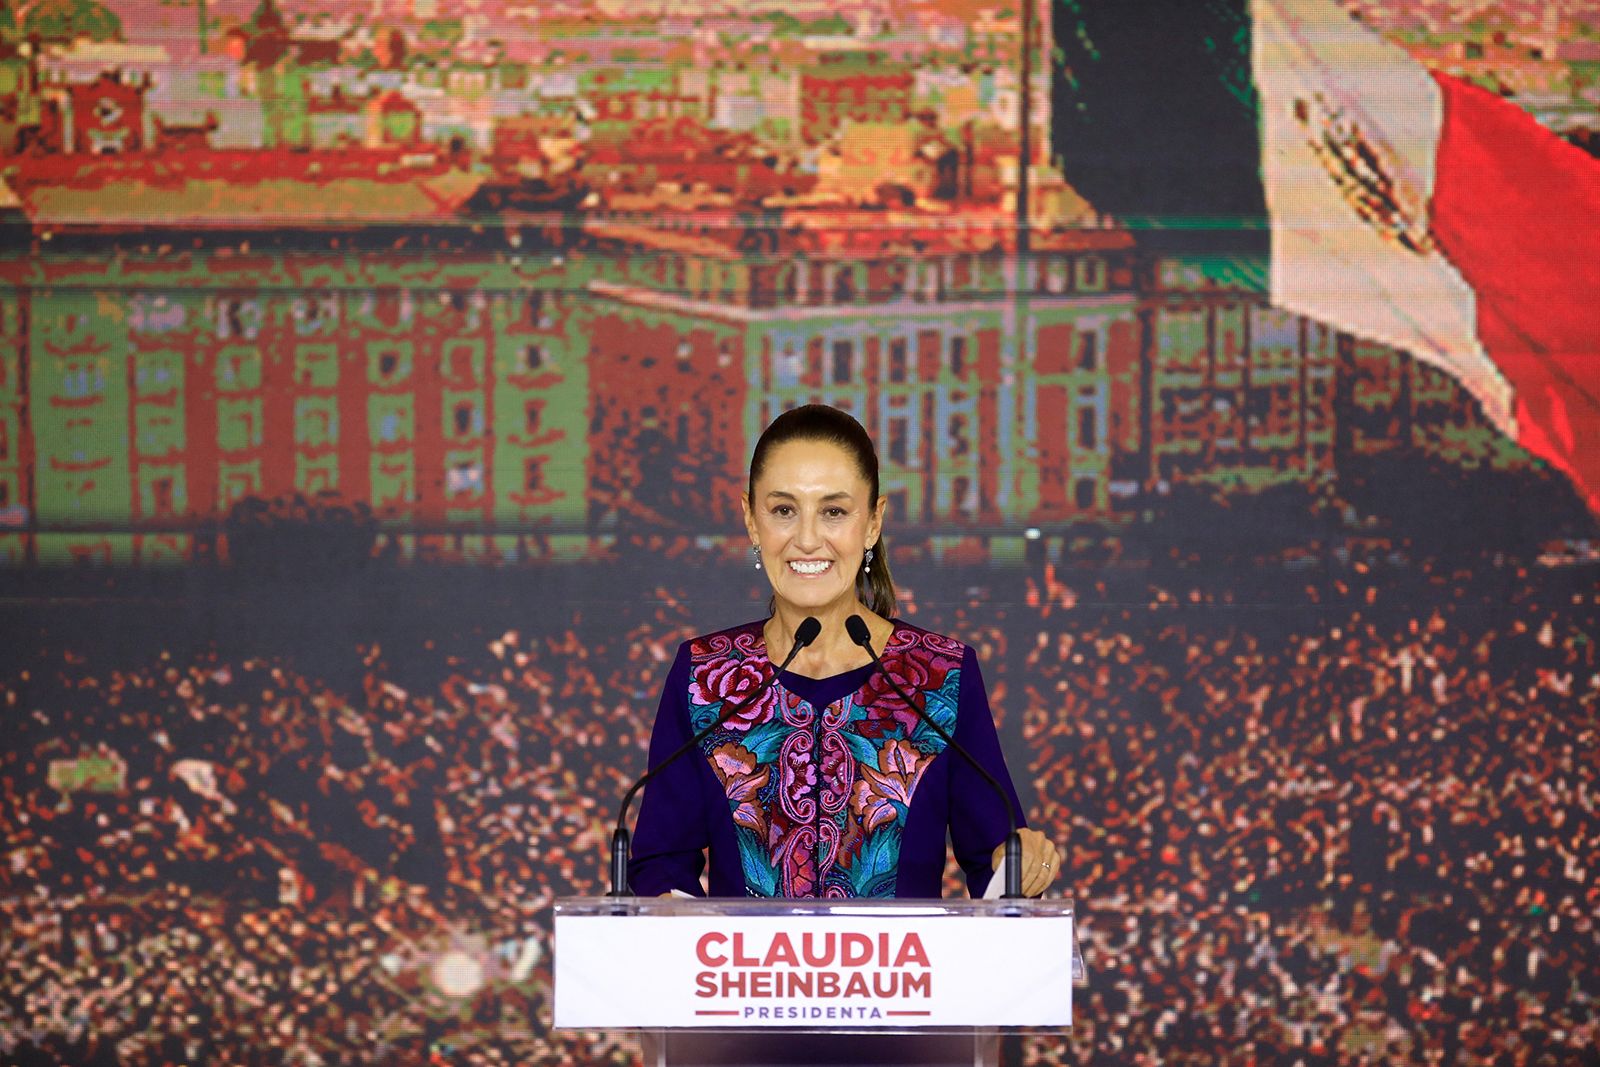 Claudia Sheinbaum Mexico's first female president, preliminary results show